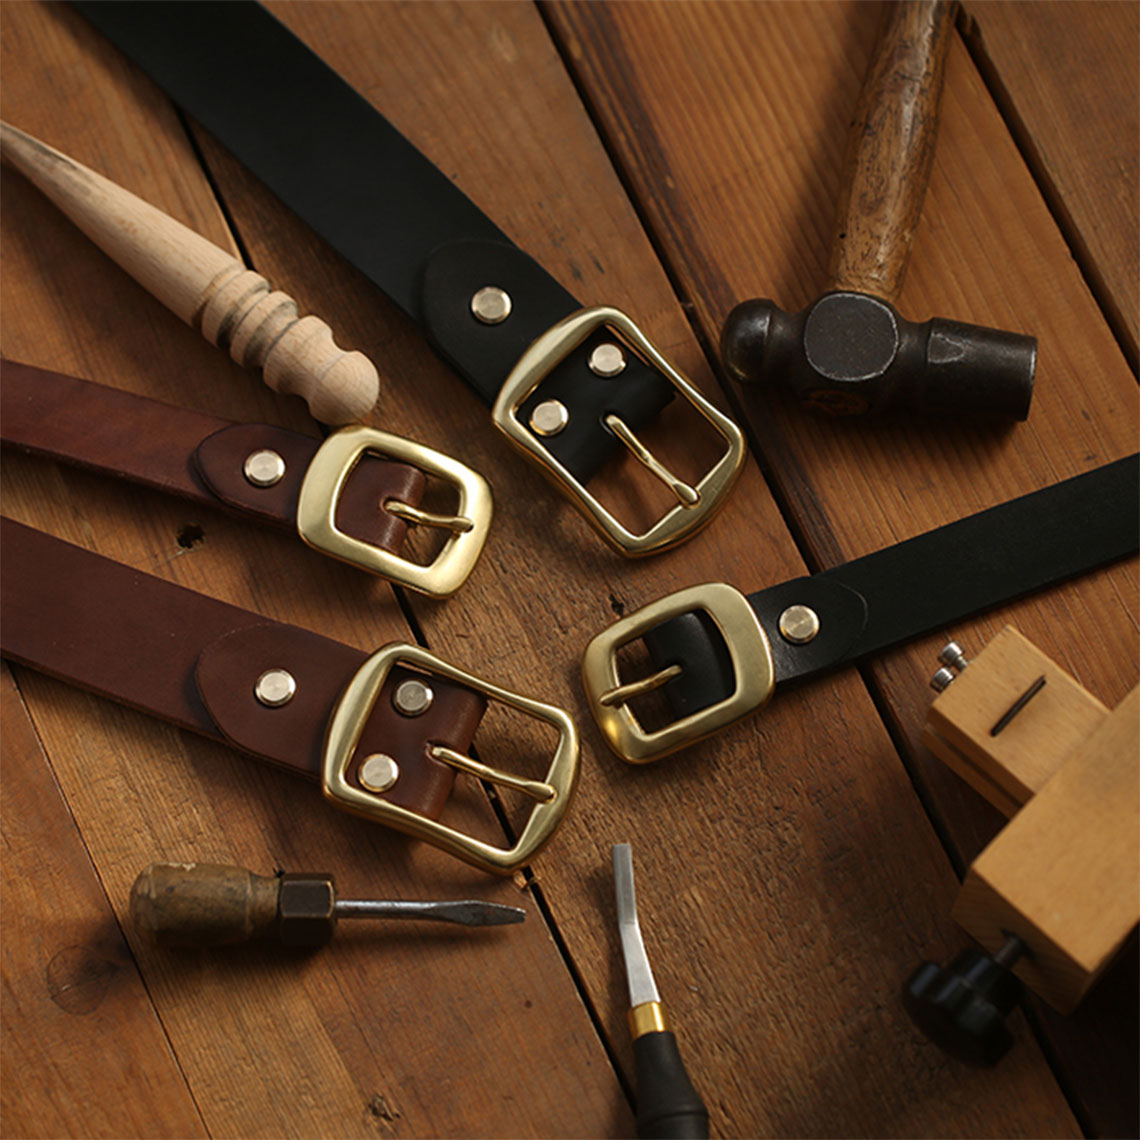 POPSEWING® Full Grain Leather Belt DIY Kit